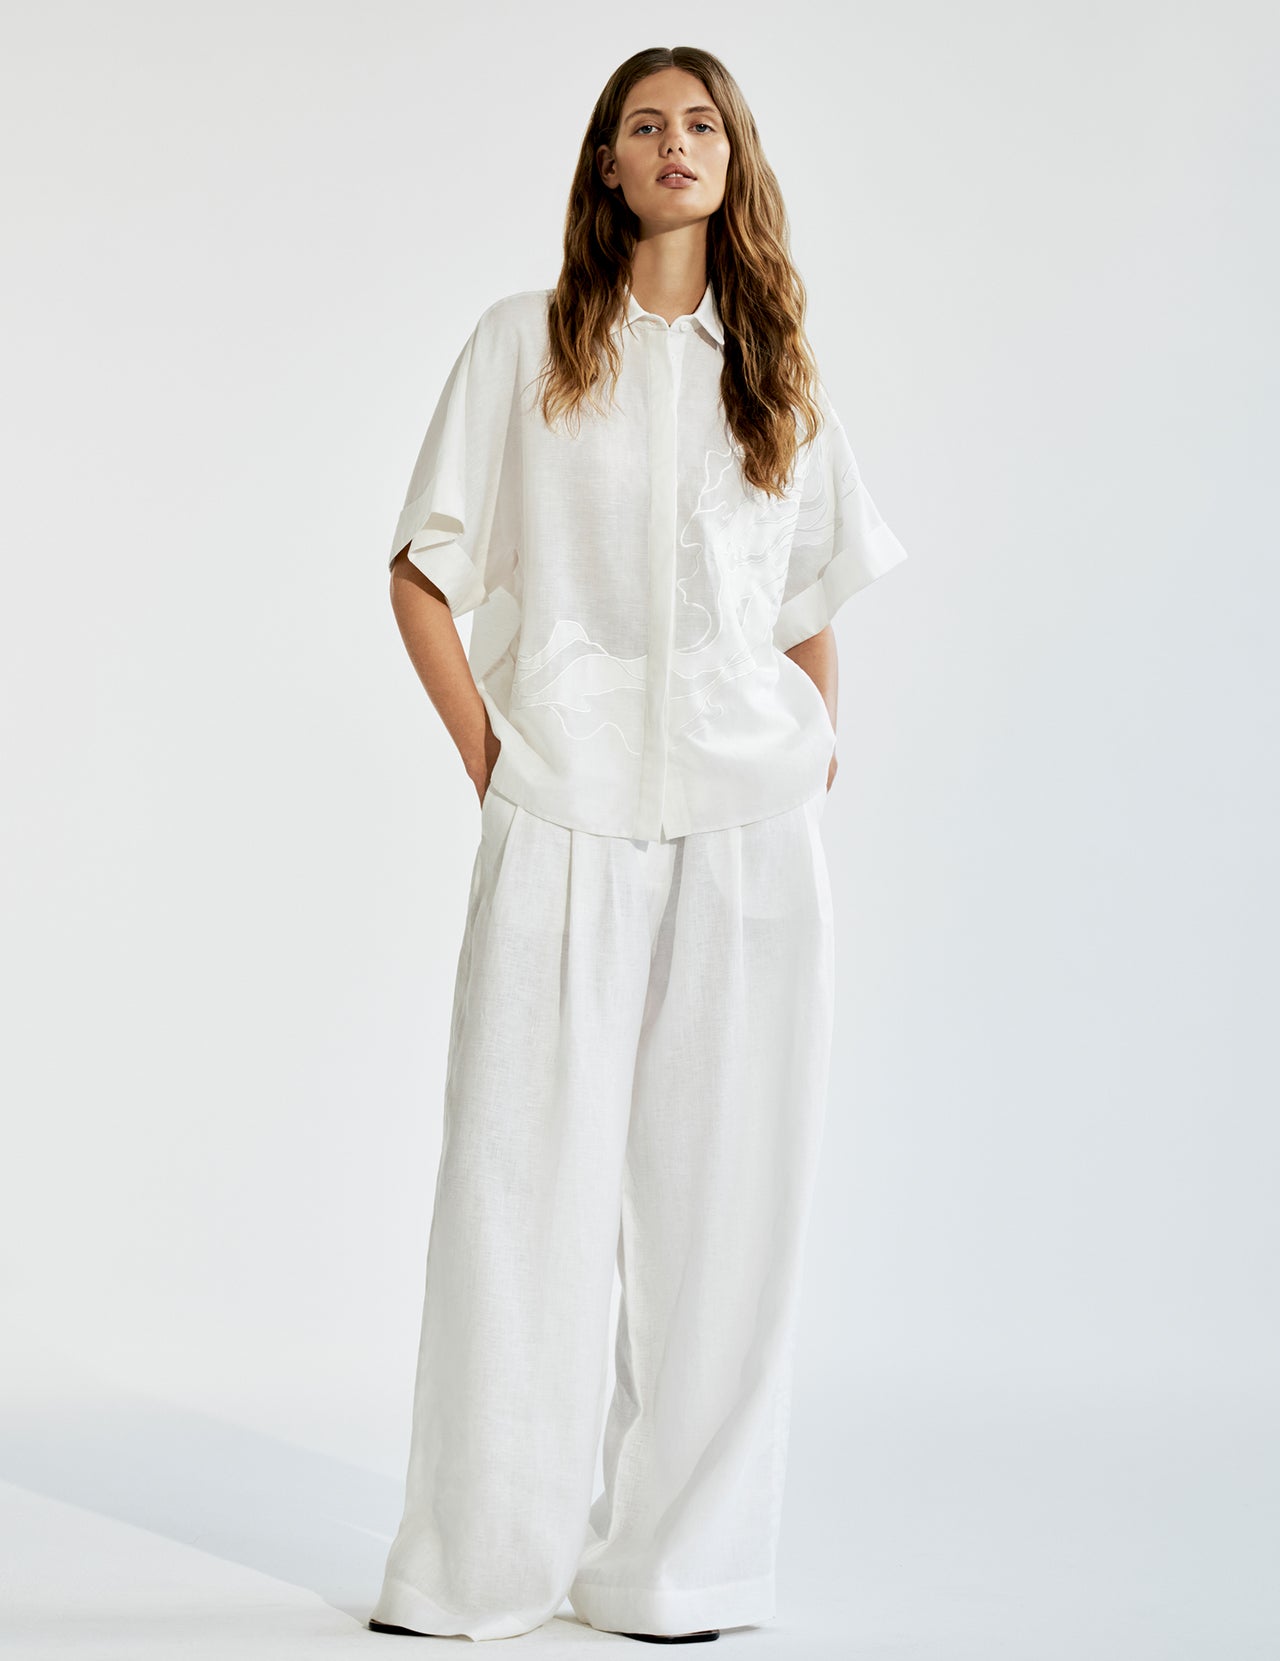  White Linen Kimono Sleeve Shirt With Cutwork Appliqué 